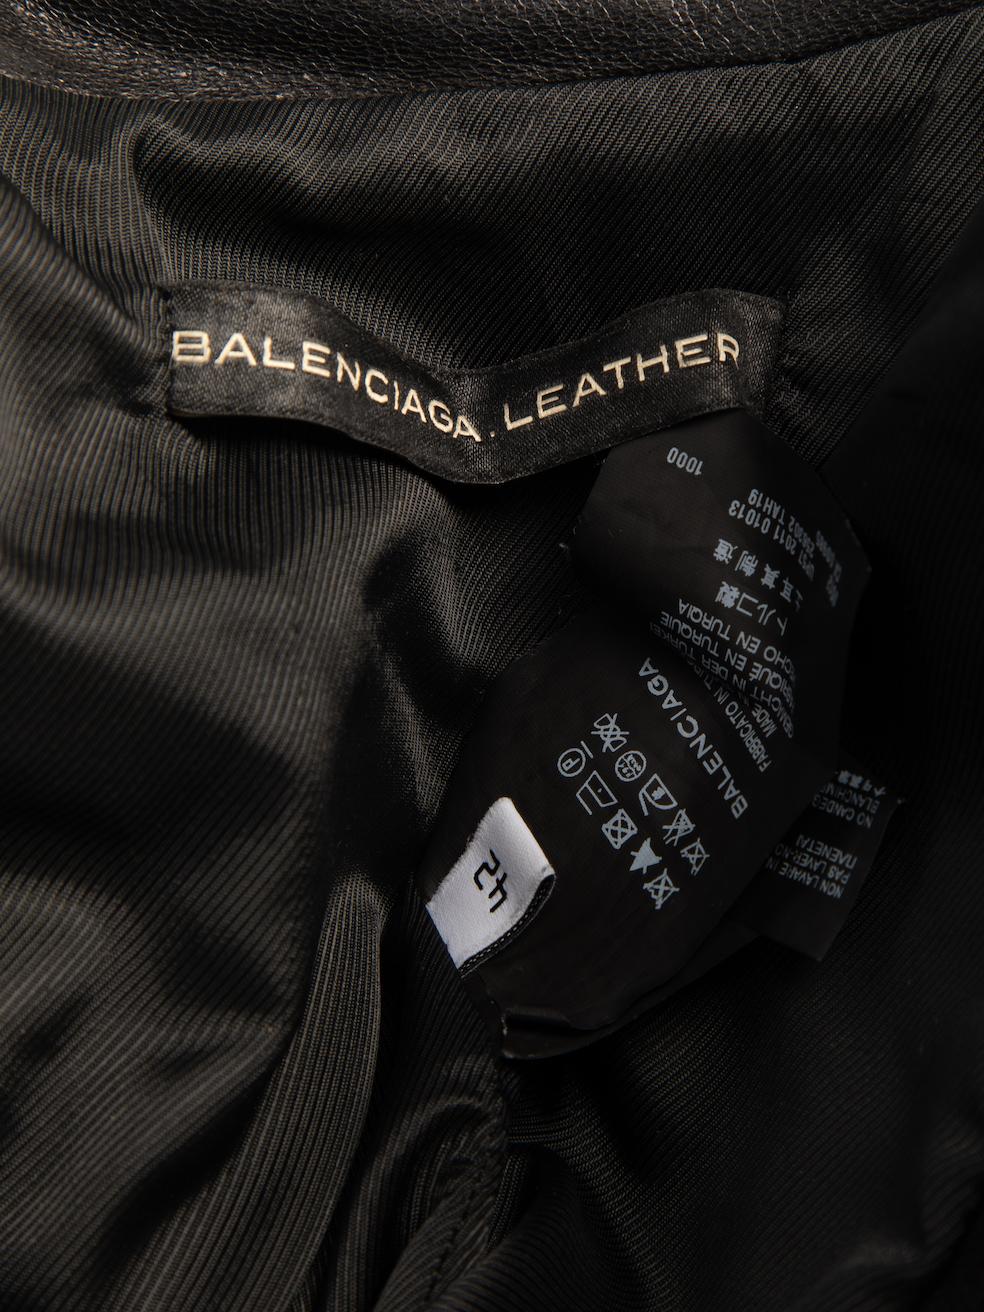 Pre-Loved Balenciaga Women's Black Leather Biker Zipped Jacket 1